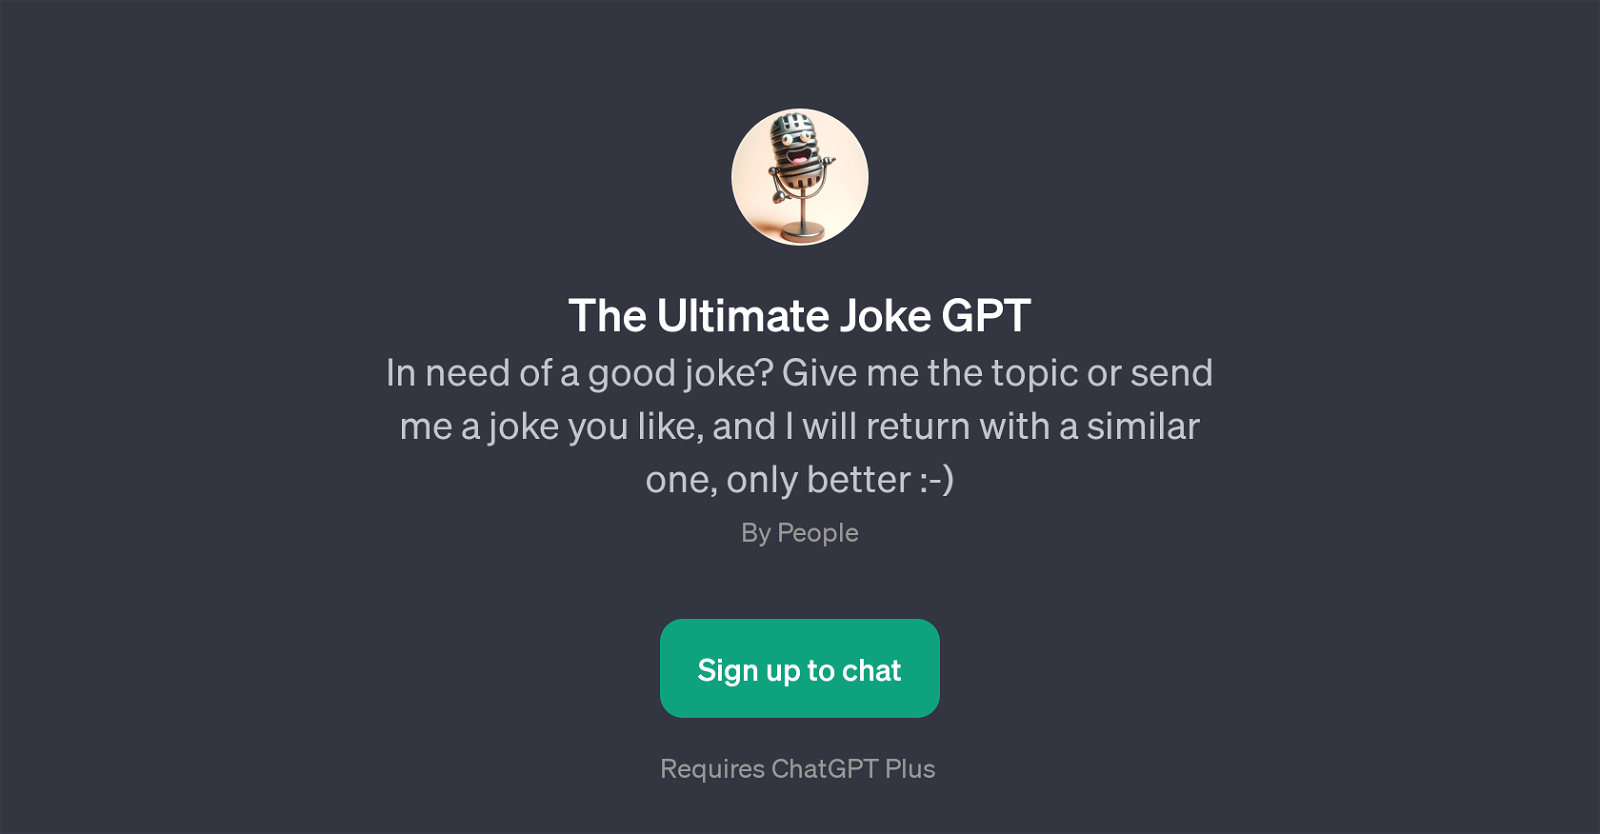 The Ultimate Joke GPT website